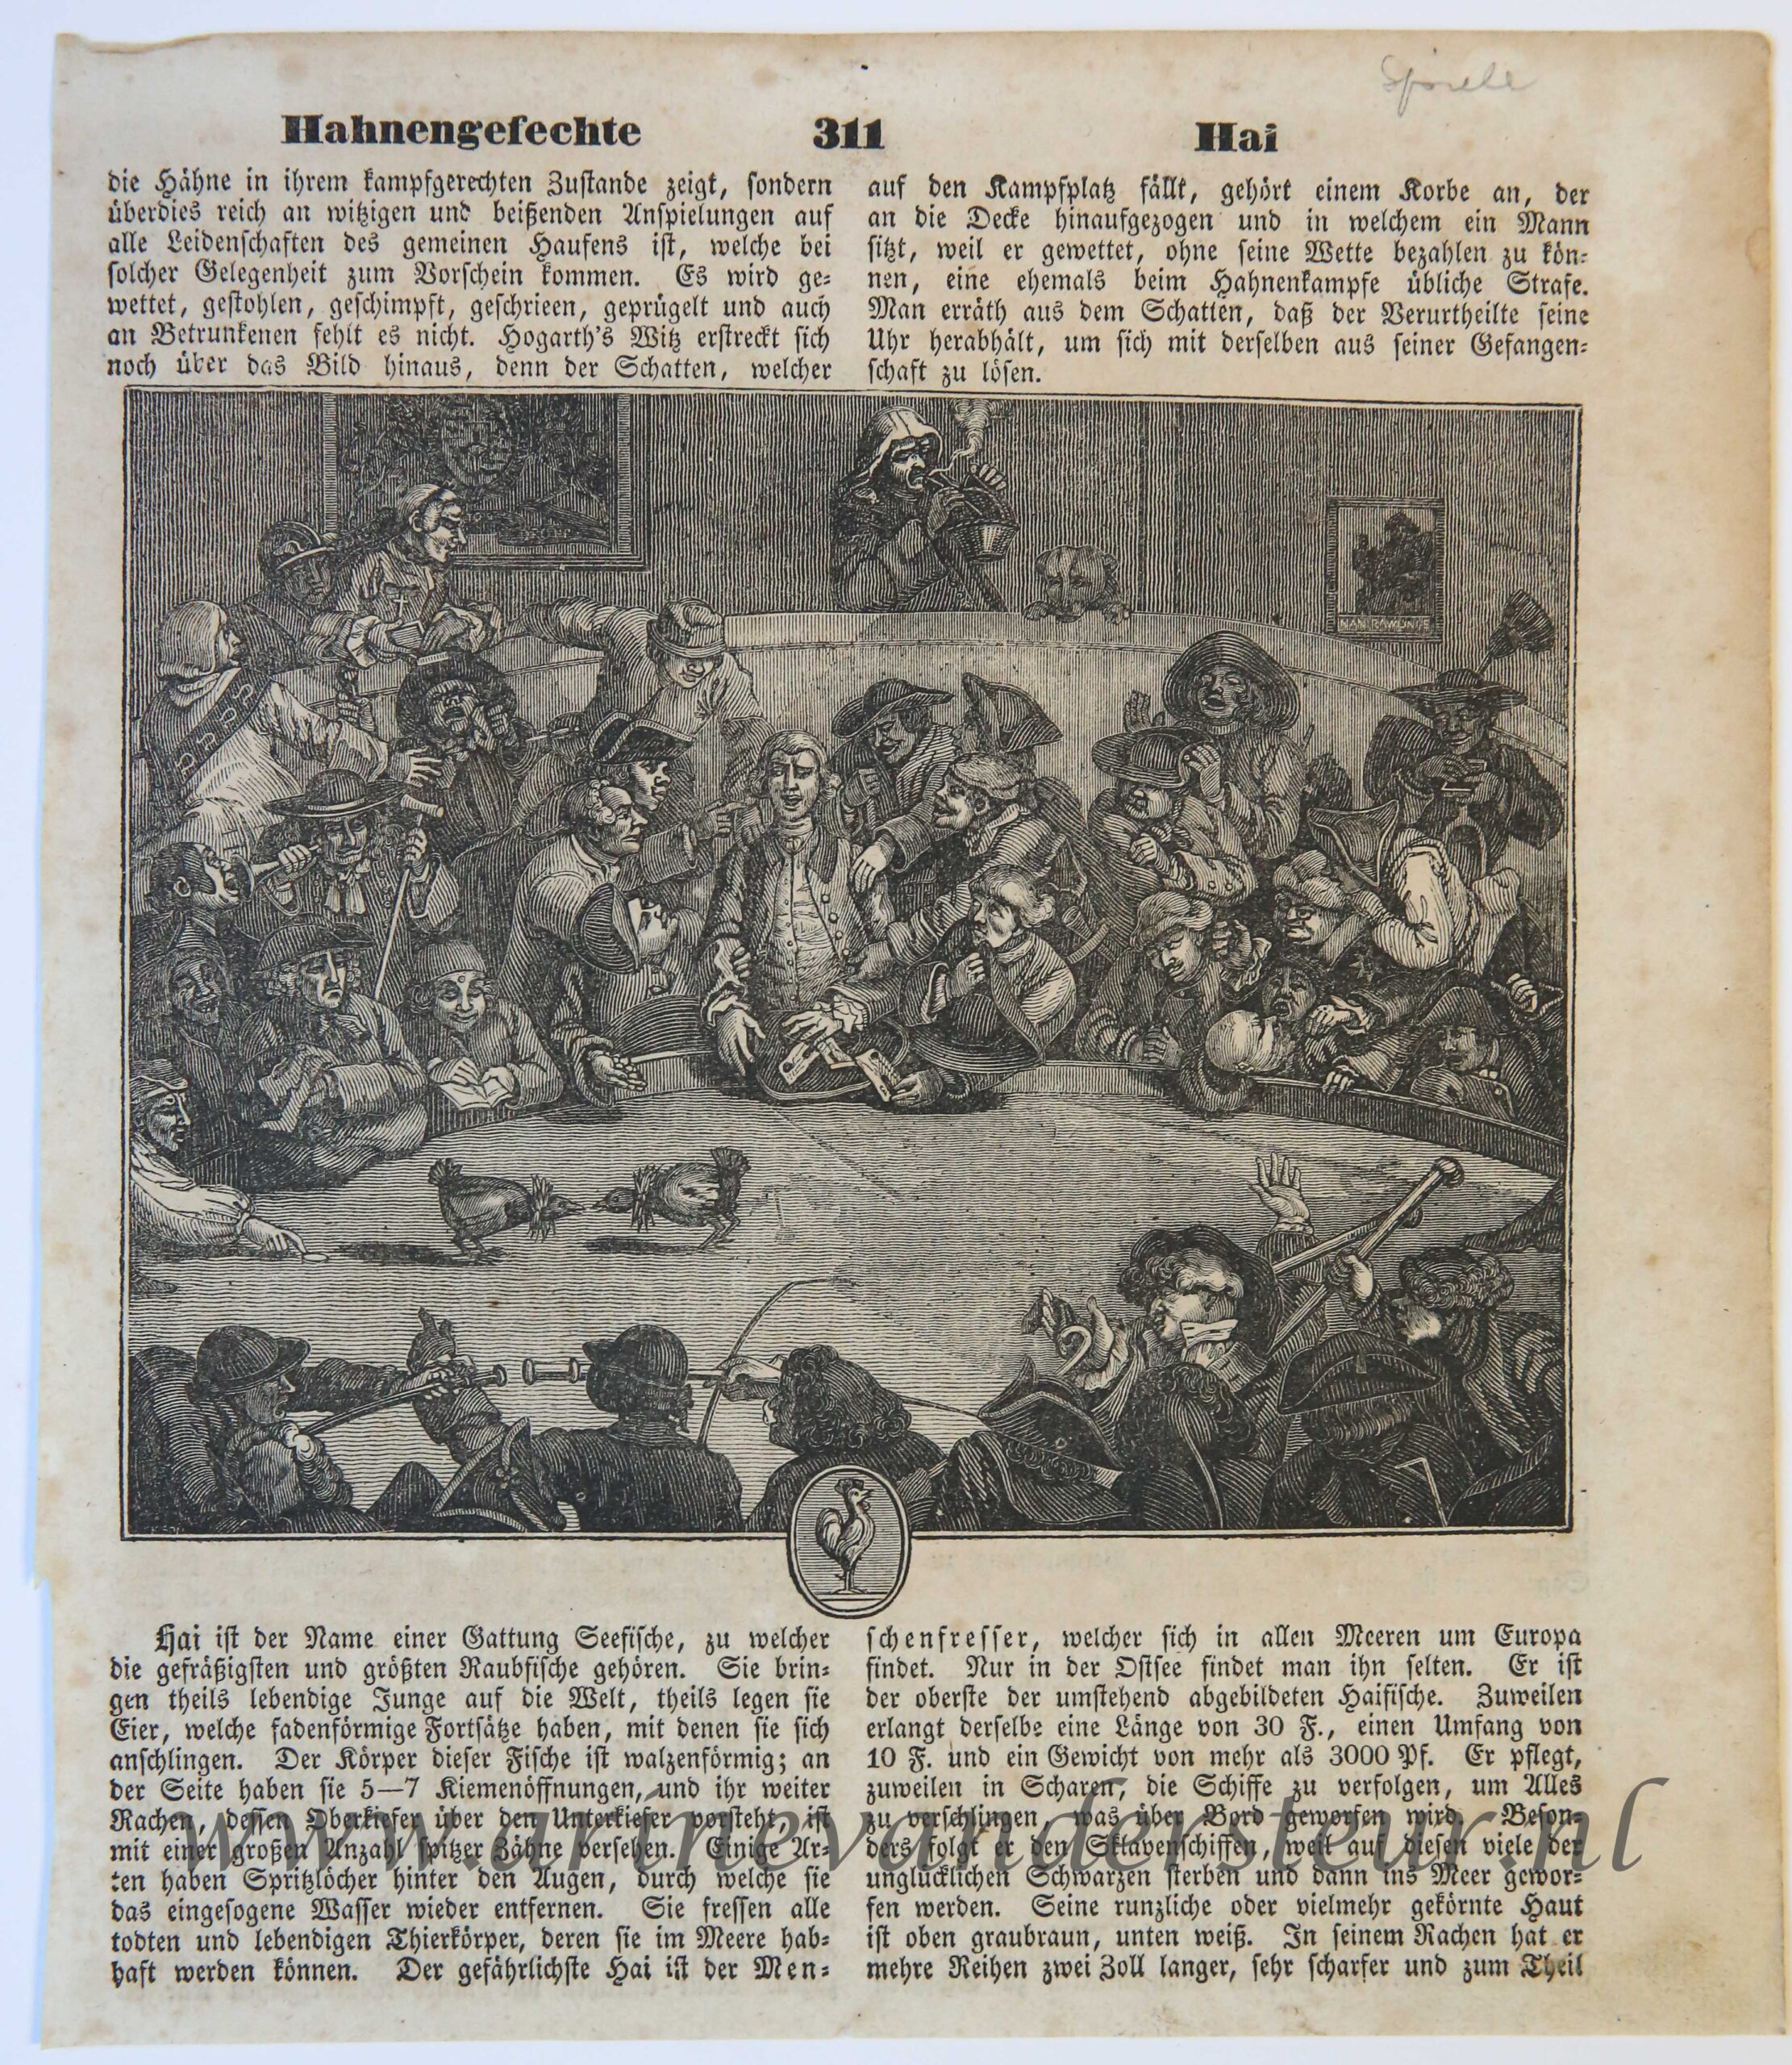 [Antique print, game, engraving] Hahnengefechte (Hanengevecht, cockfight), published c. 1890.